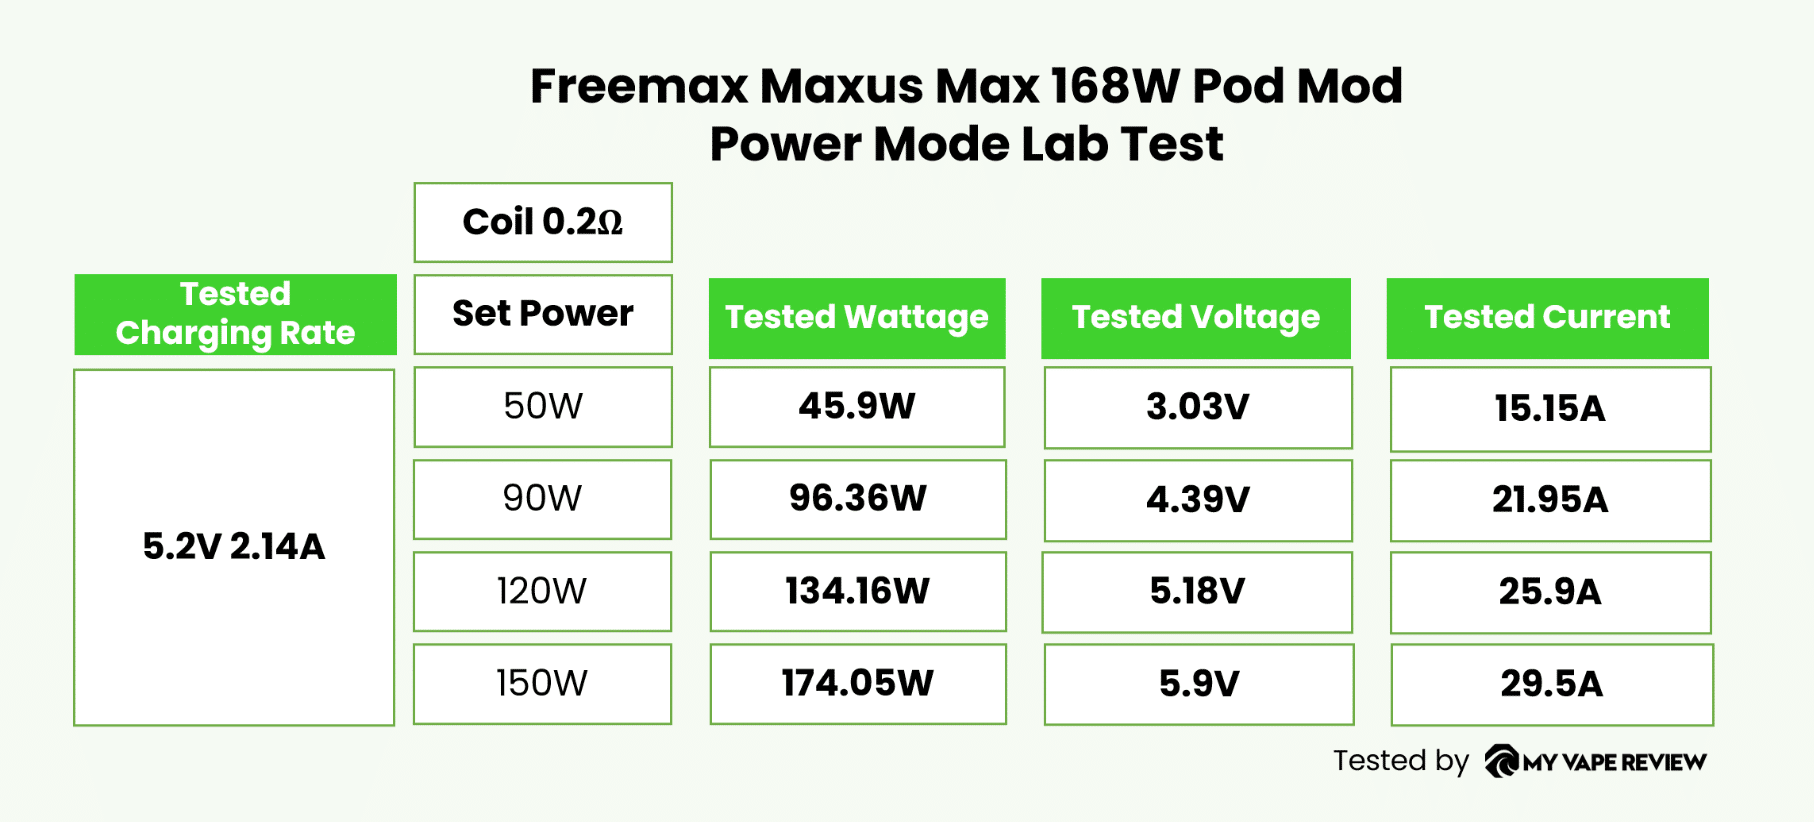 prueba freemax maxus max 168